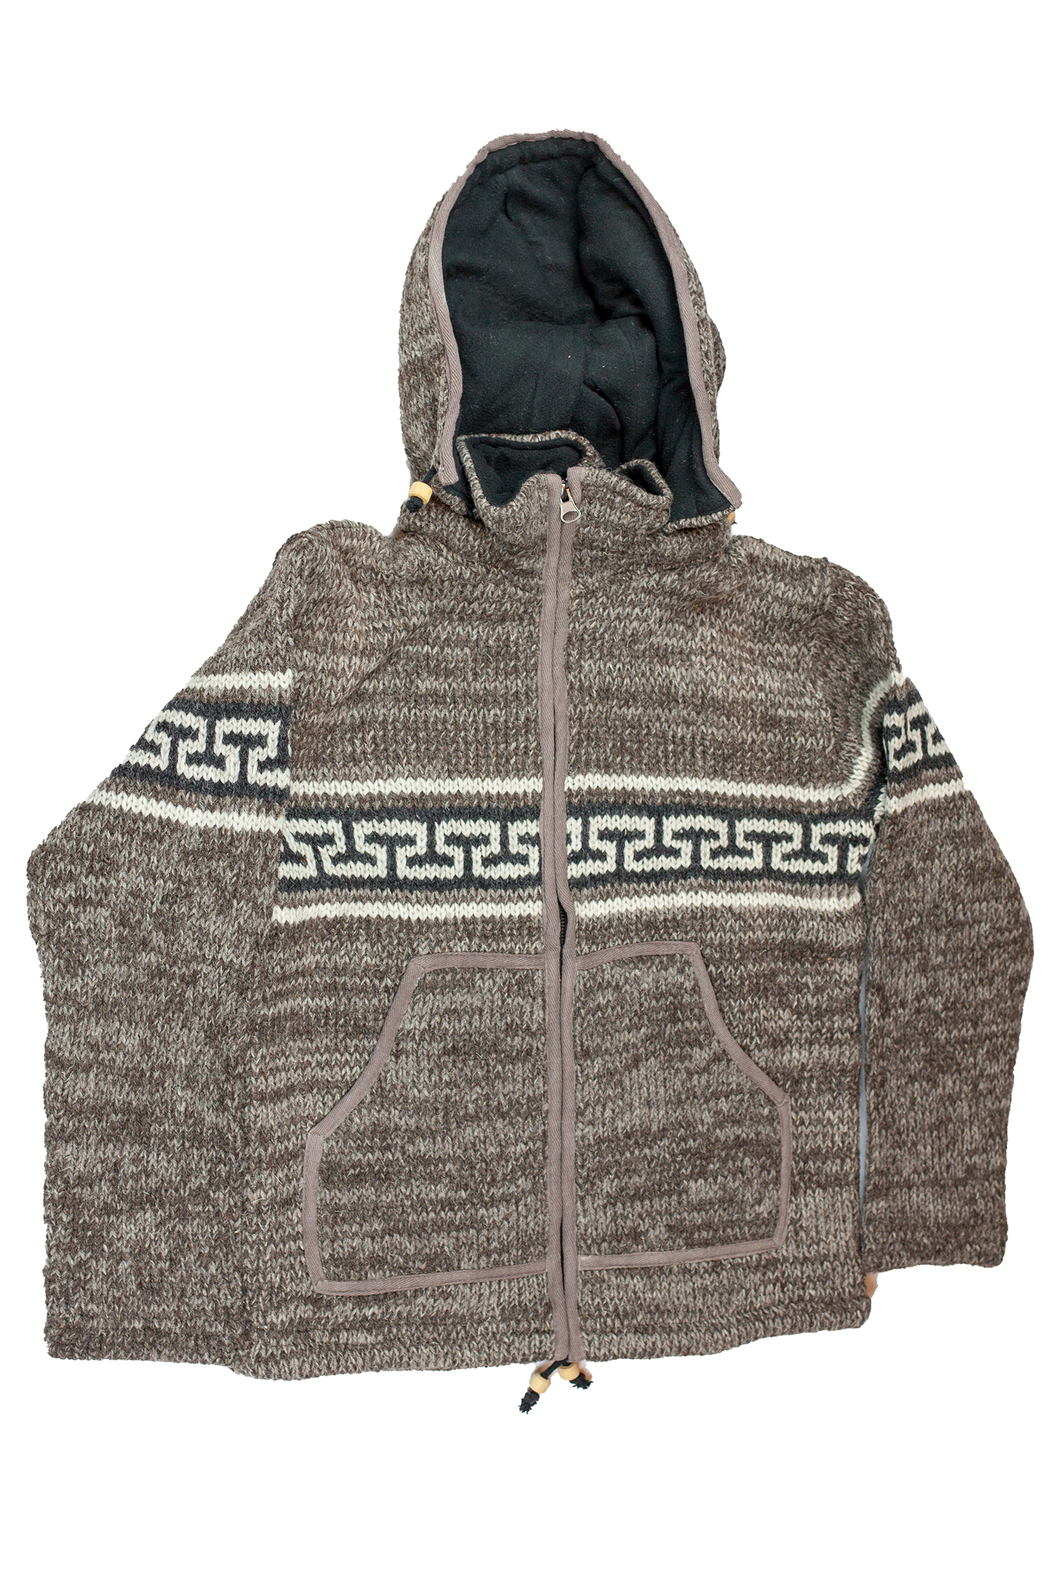 Hand knitted woolen jacket/sweater with soft inner fleece - HMPWJ14